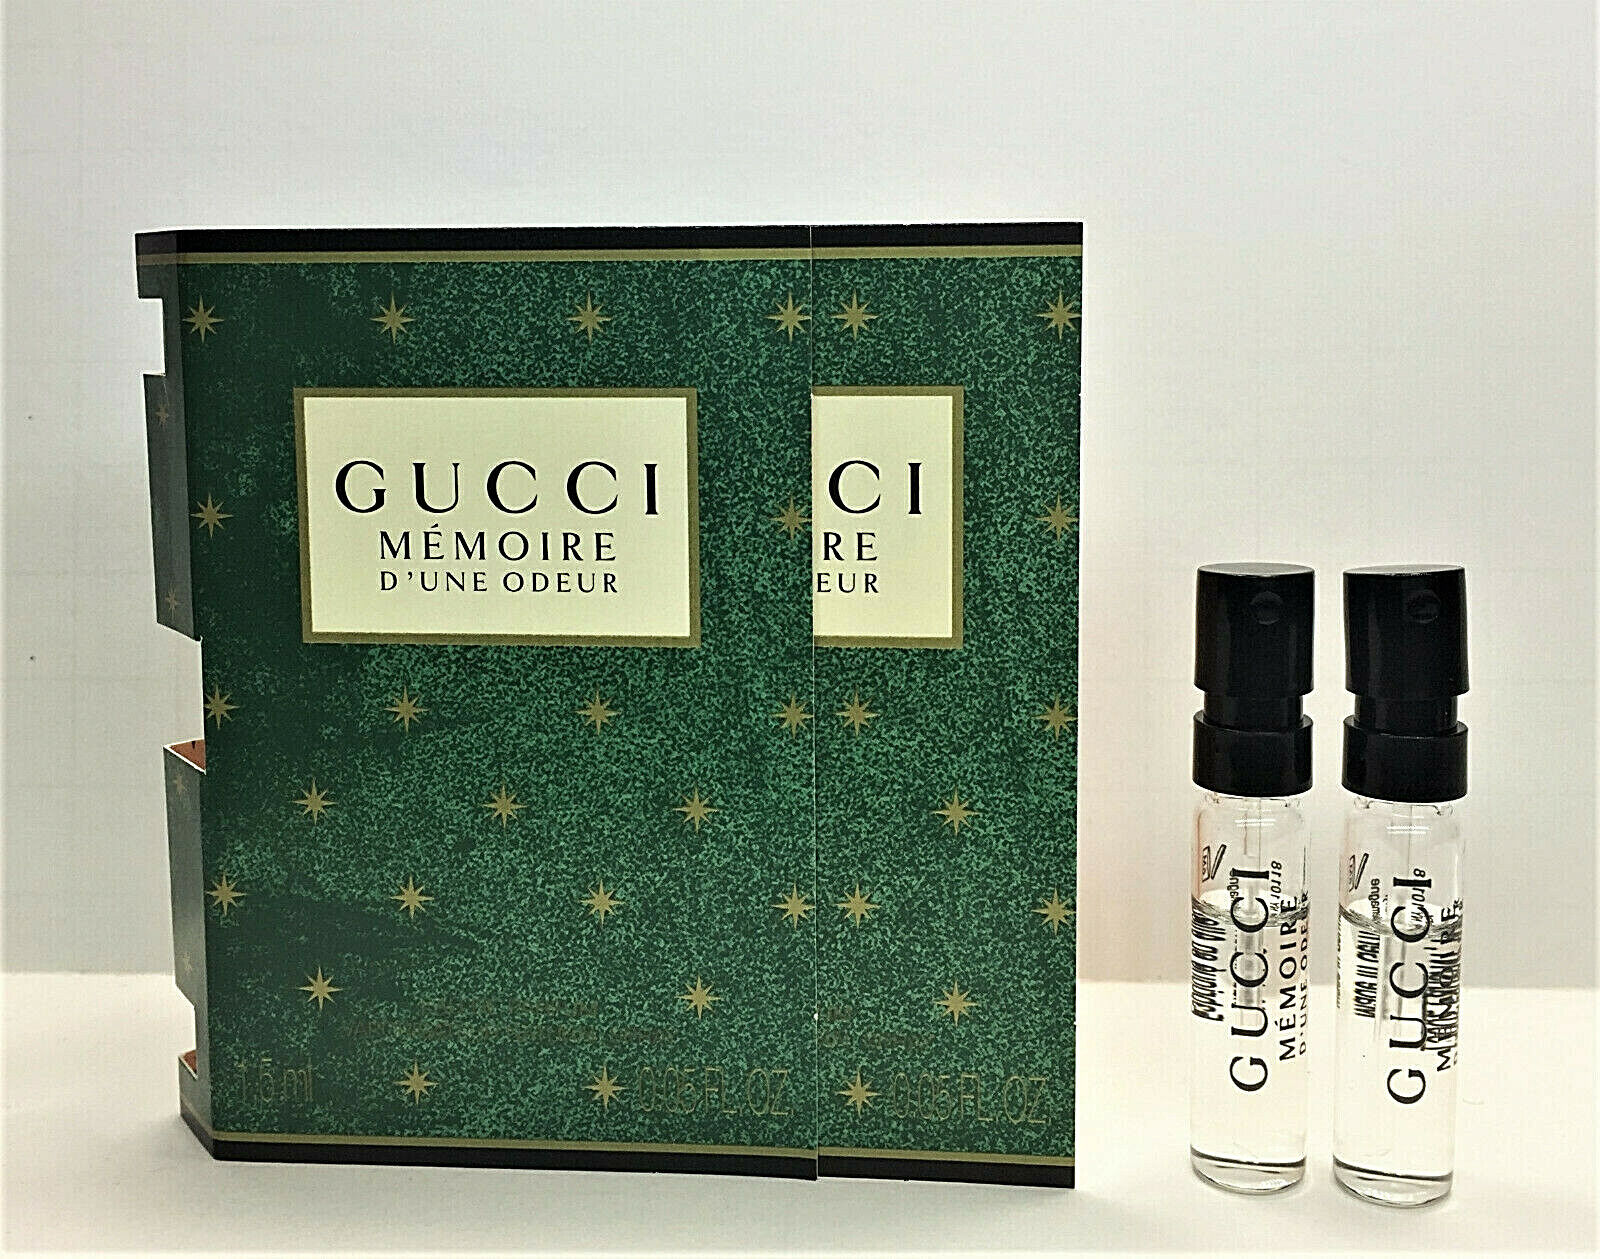 Gucci Memoire D'Une Odeur EDP SpraySample Vials 2 x 1.5 ml Gucci none